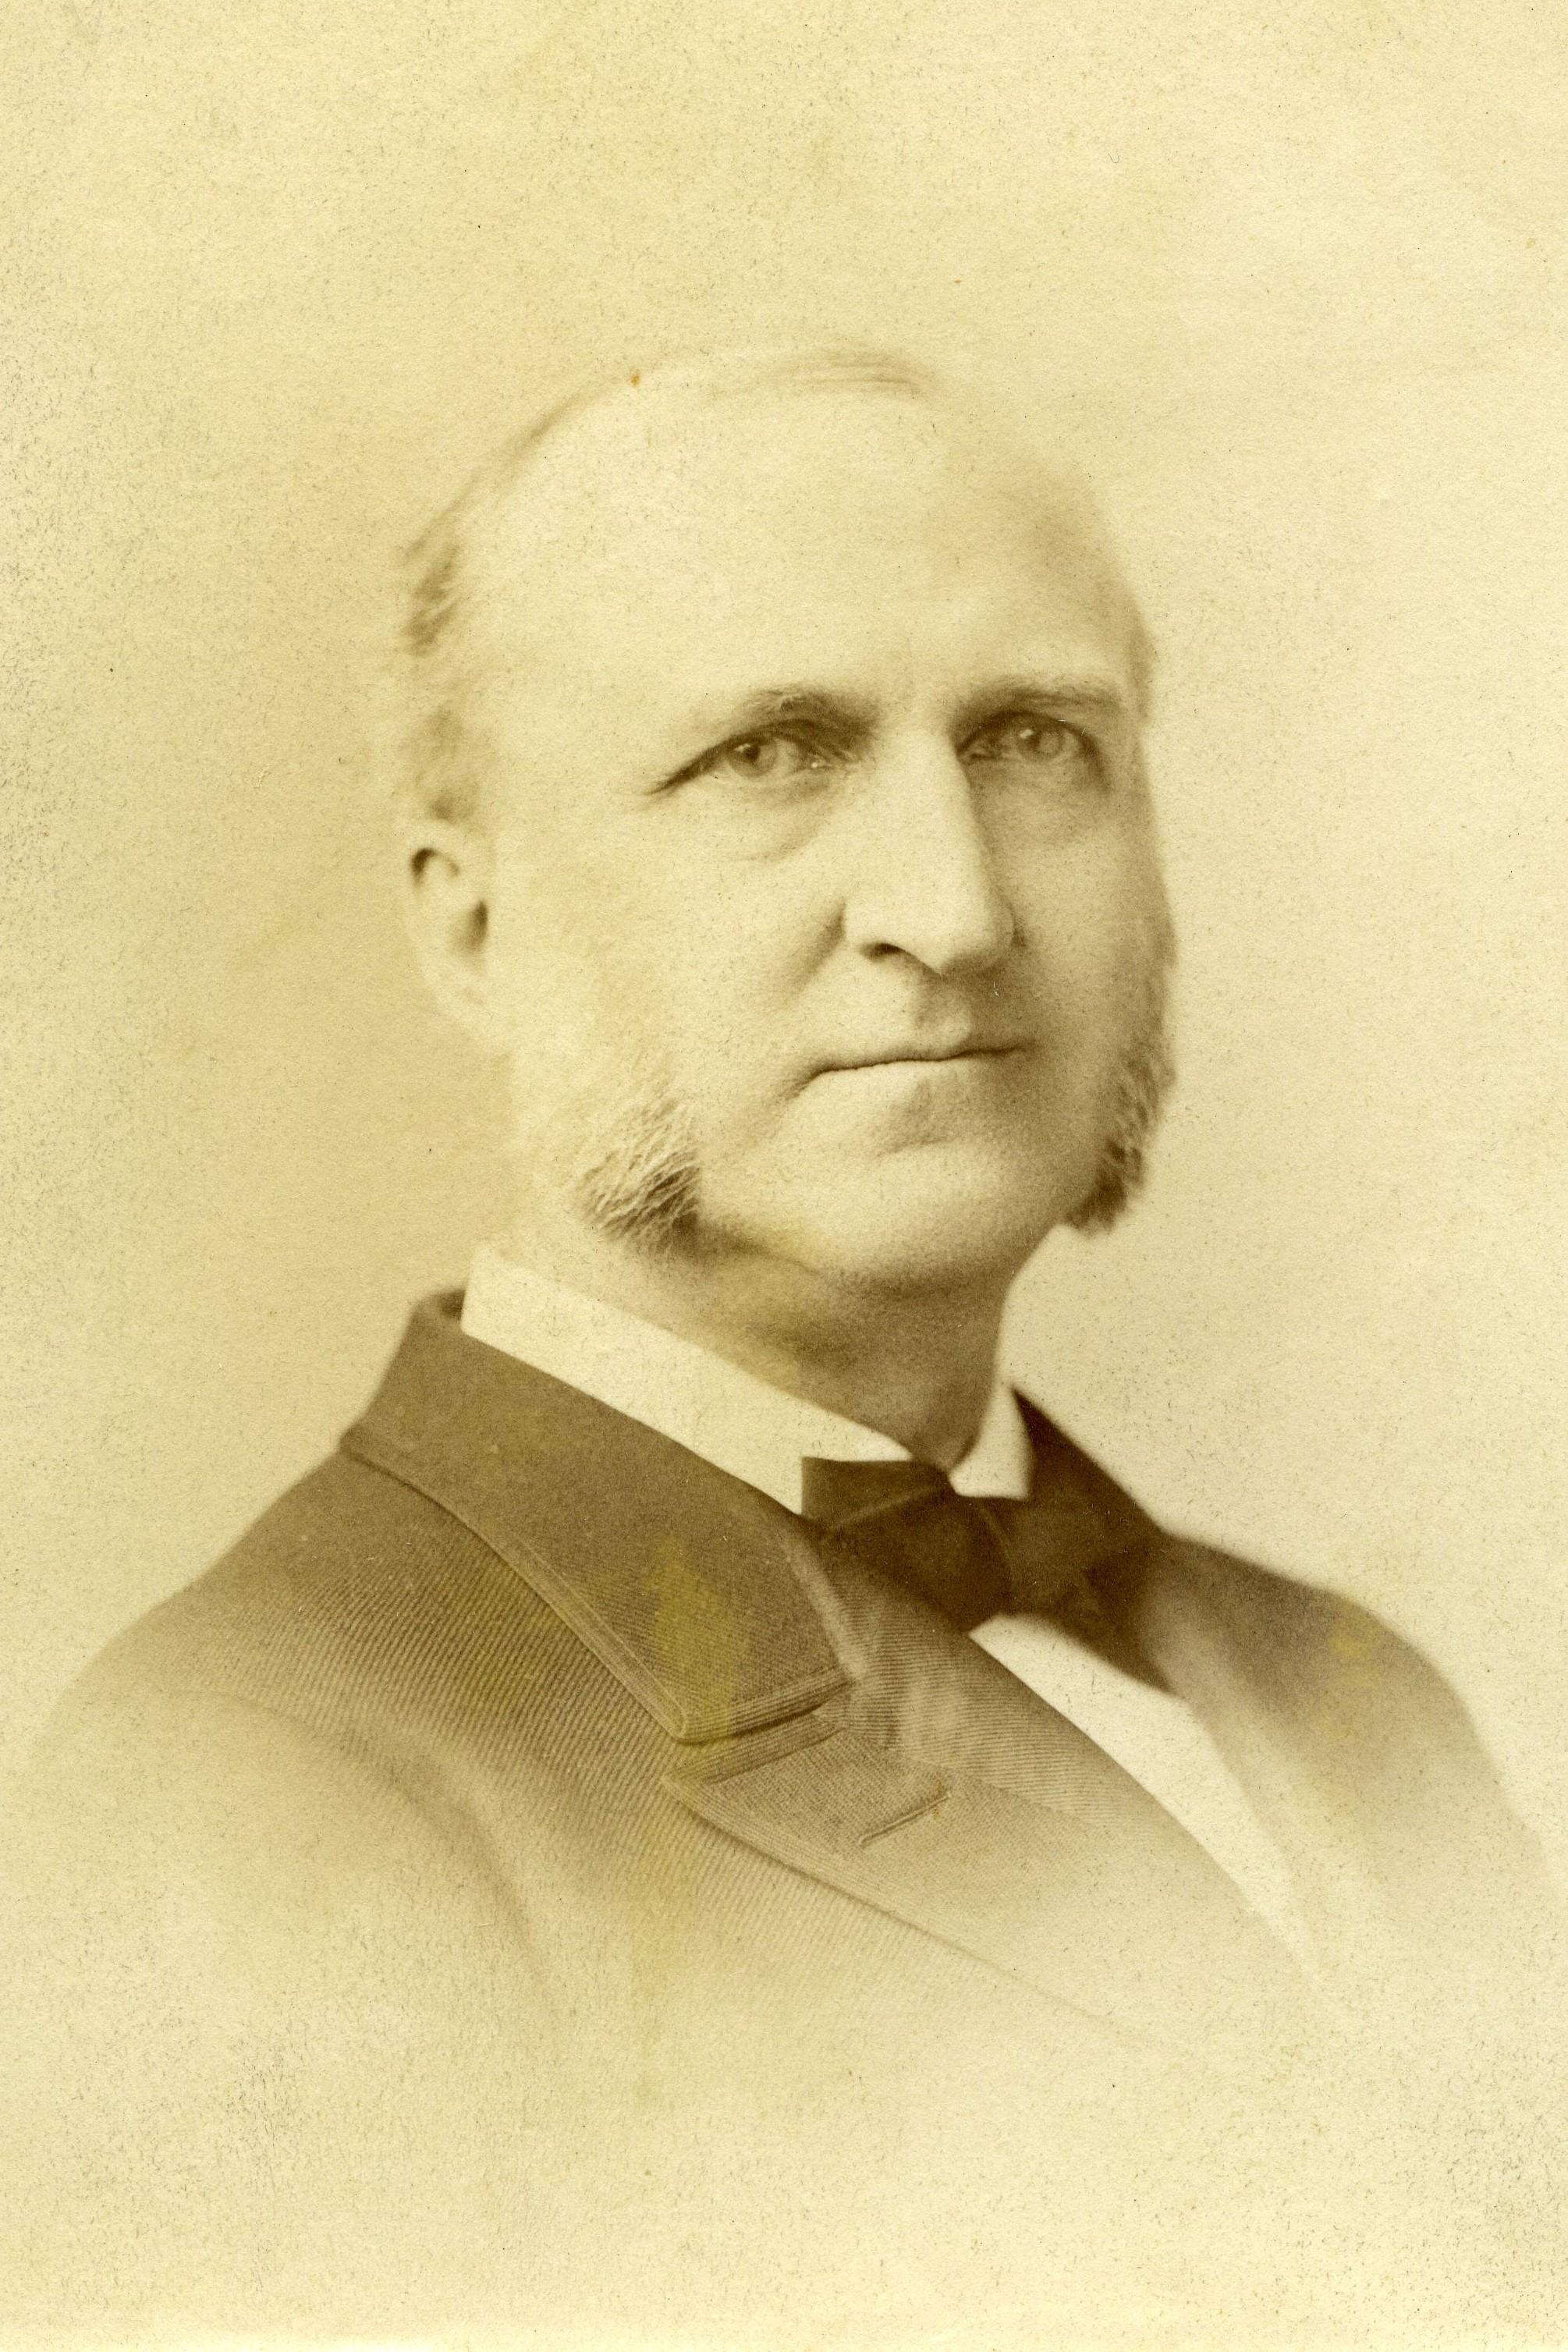 Member portrait of Chauncey M. Depew